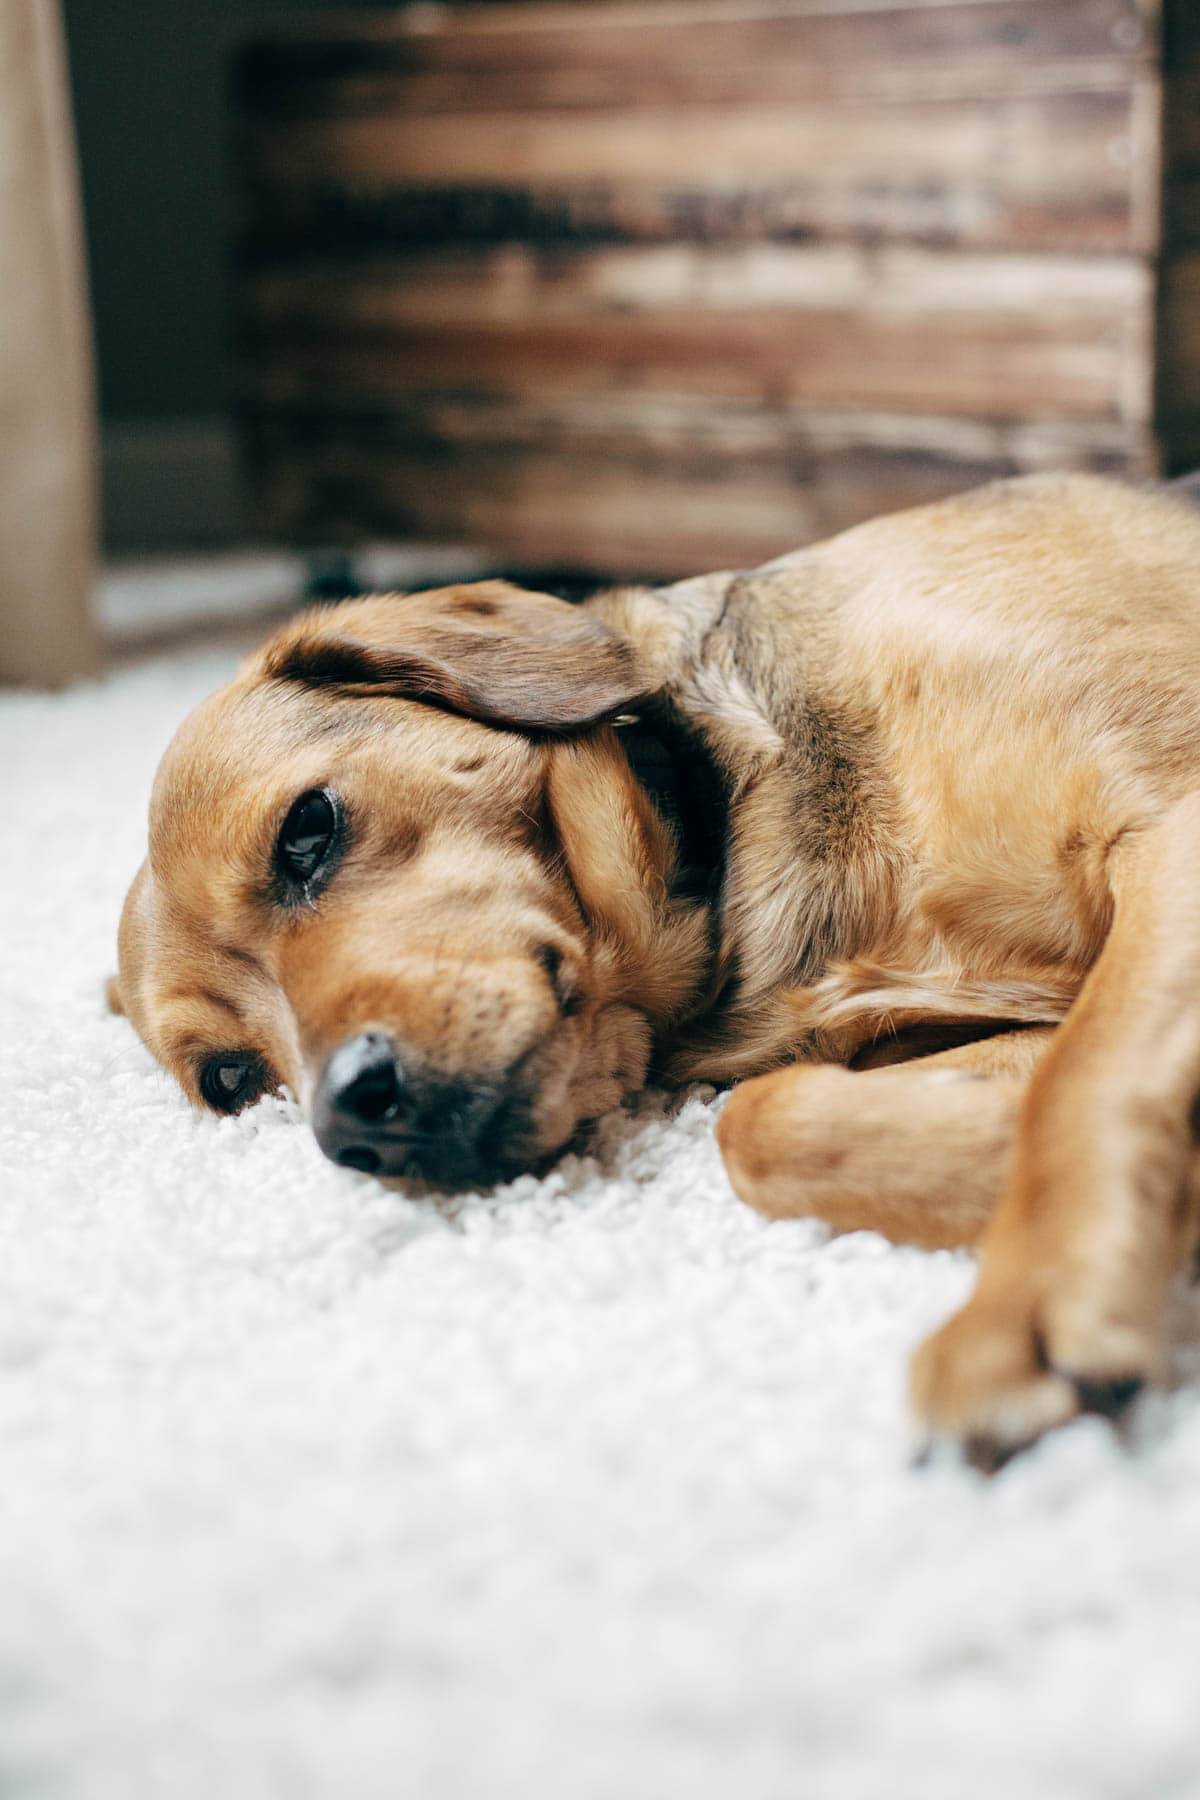 Dog laying on a carpet.